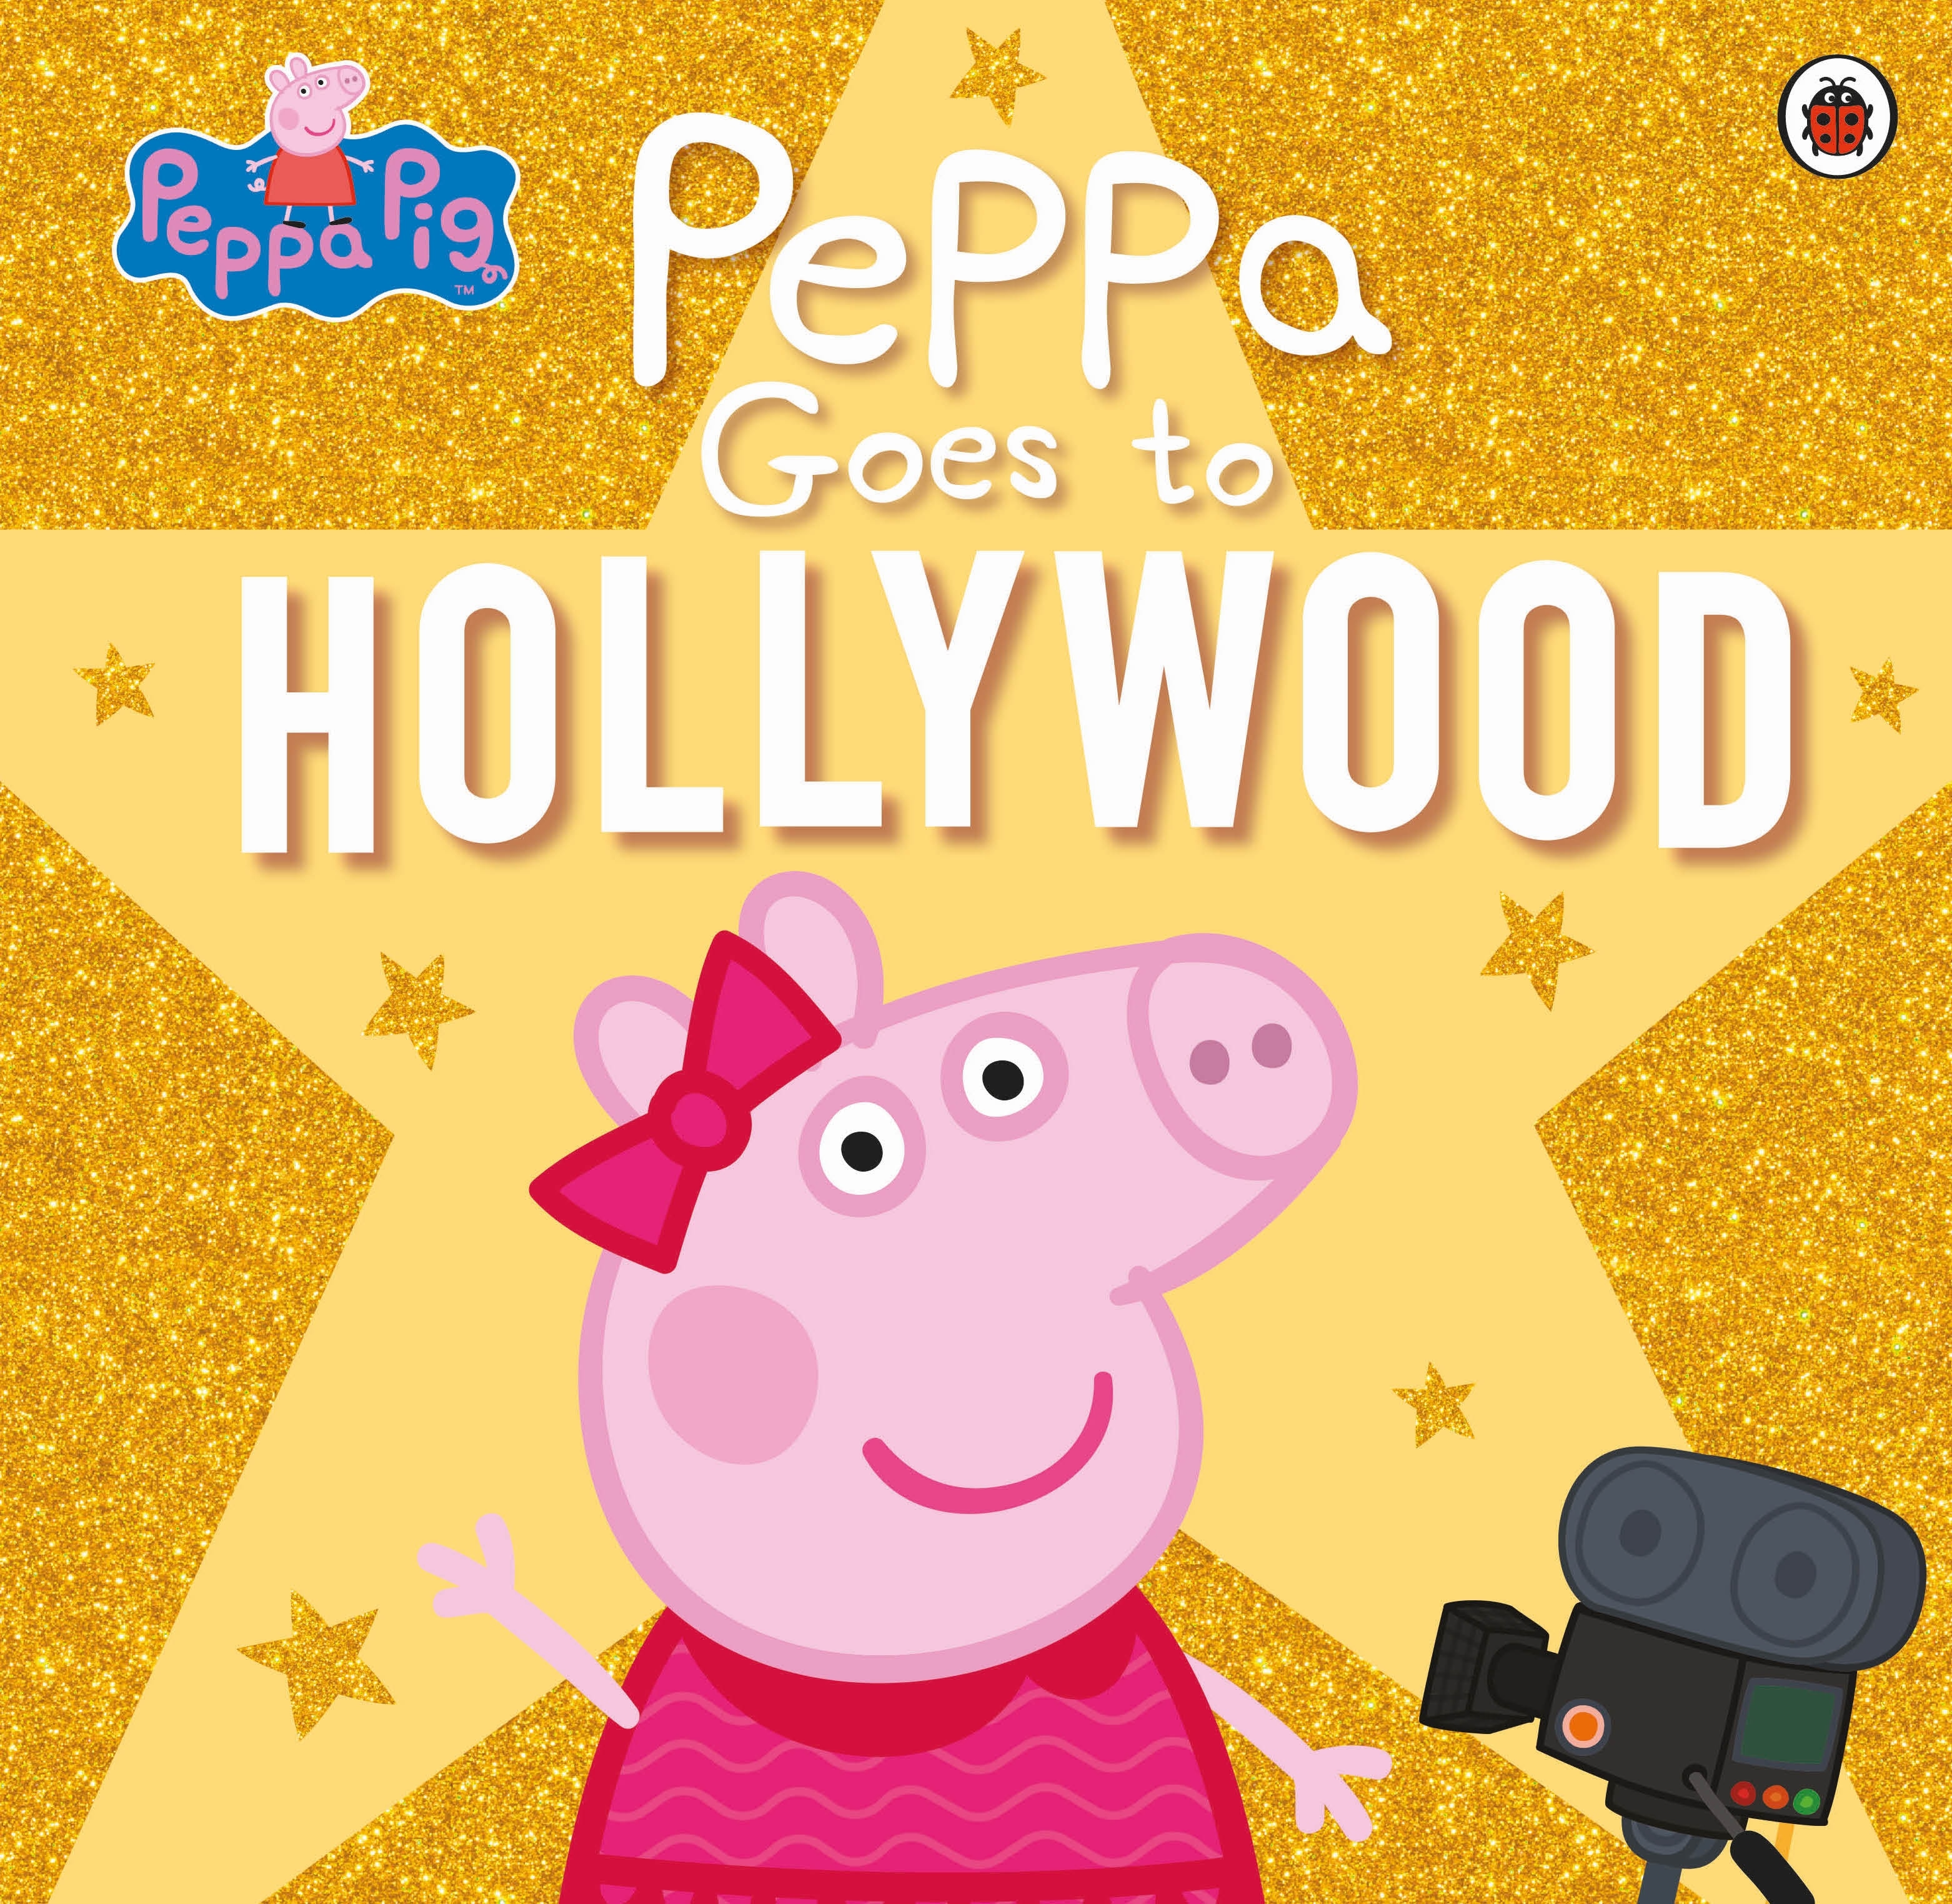 Book “Peppa Pig: Peppa Goes to Hollywood” by Peppa Pig — September 2, 2021